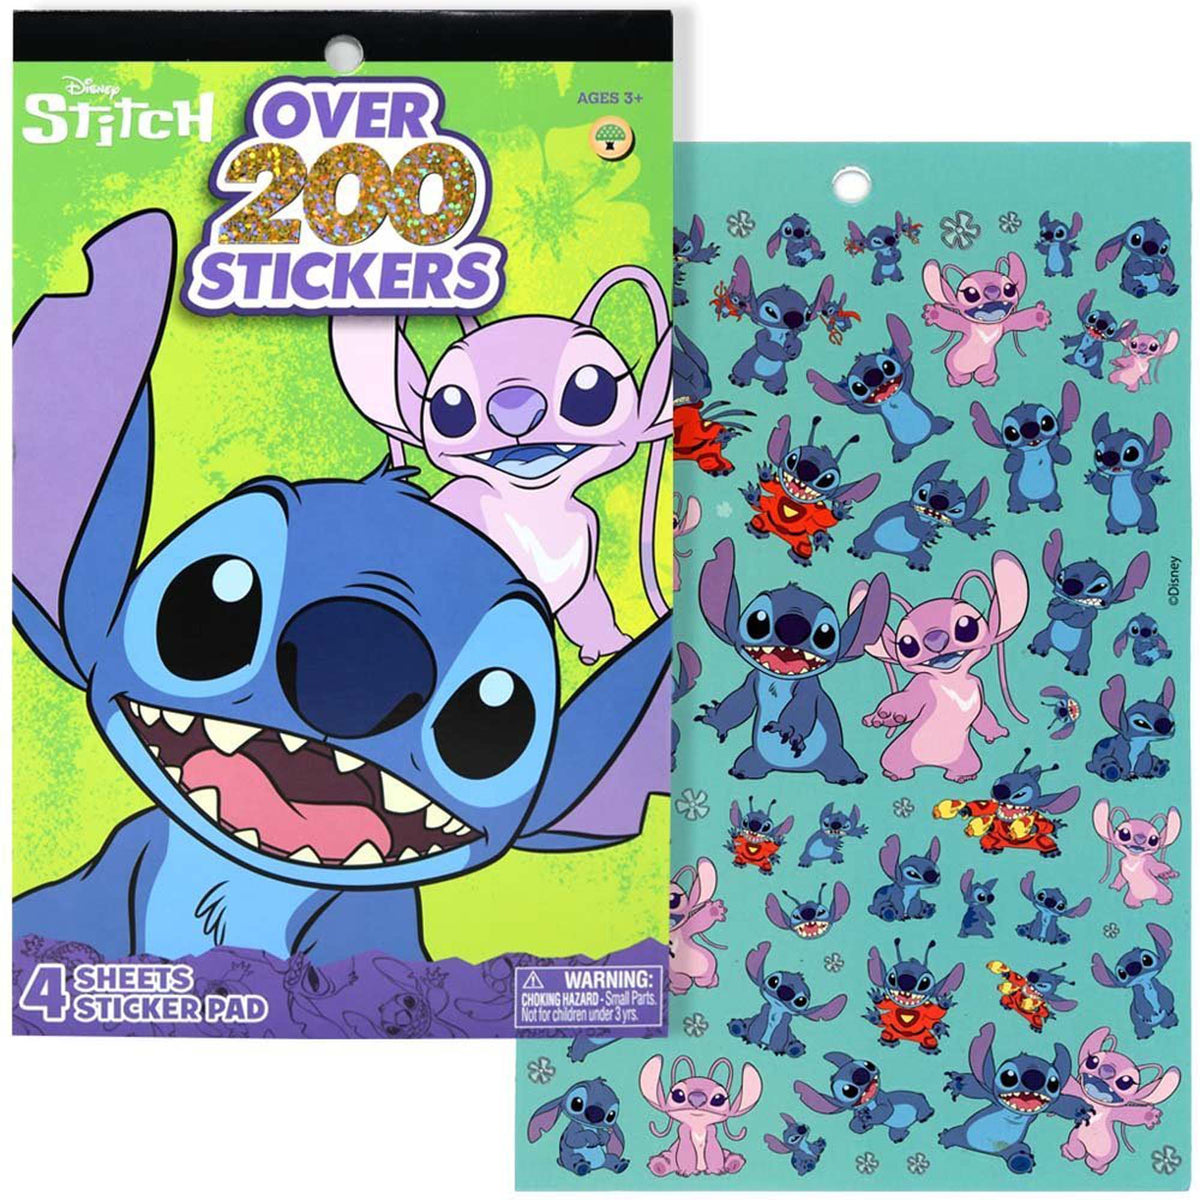 U.P.D. INC impulse buying Stitch Sticker Book, 1 Count